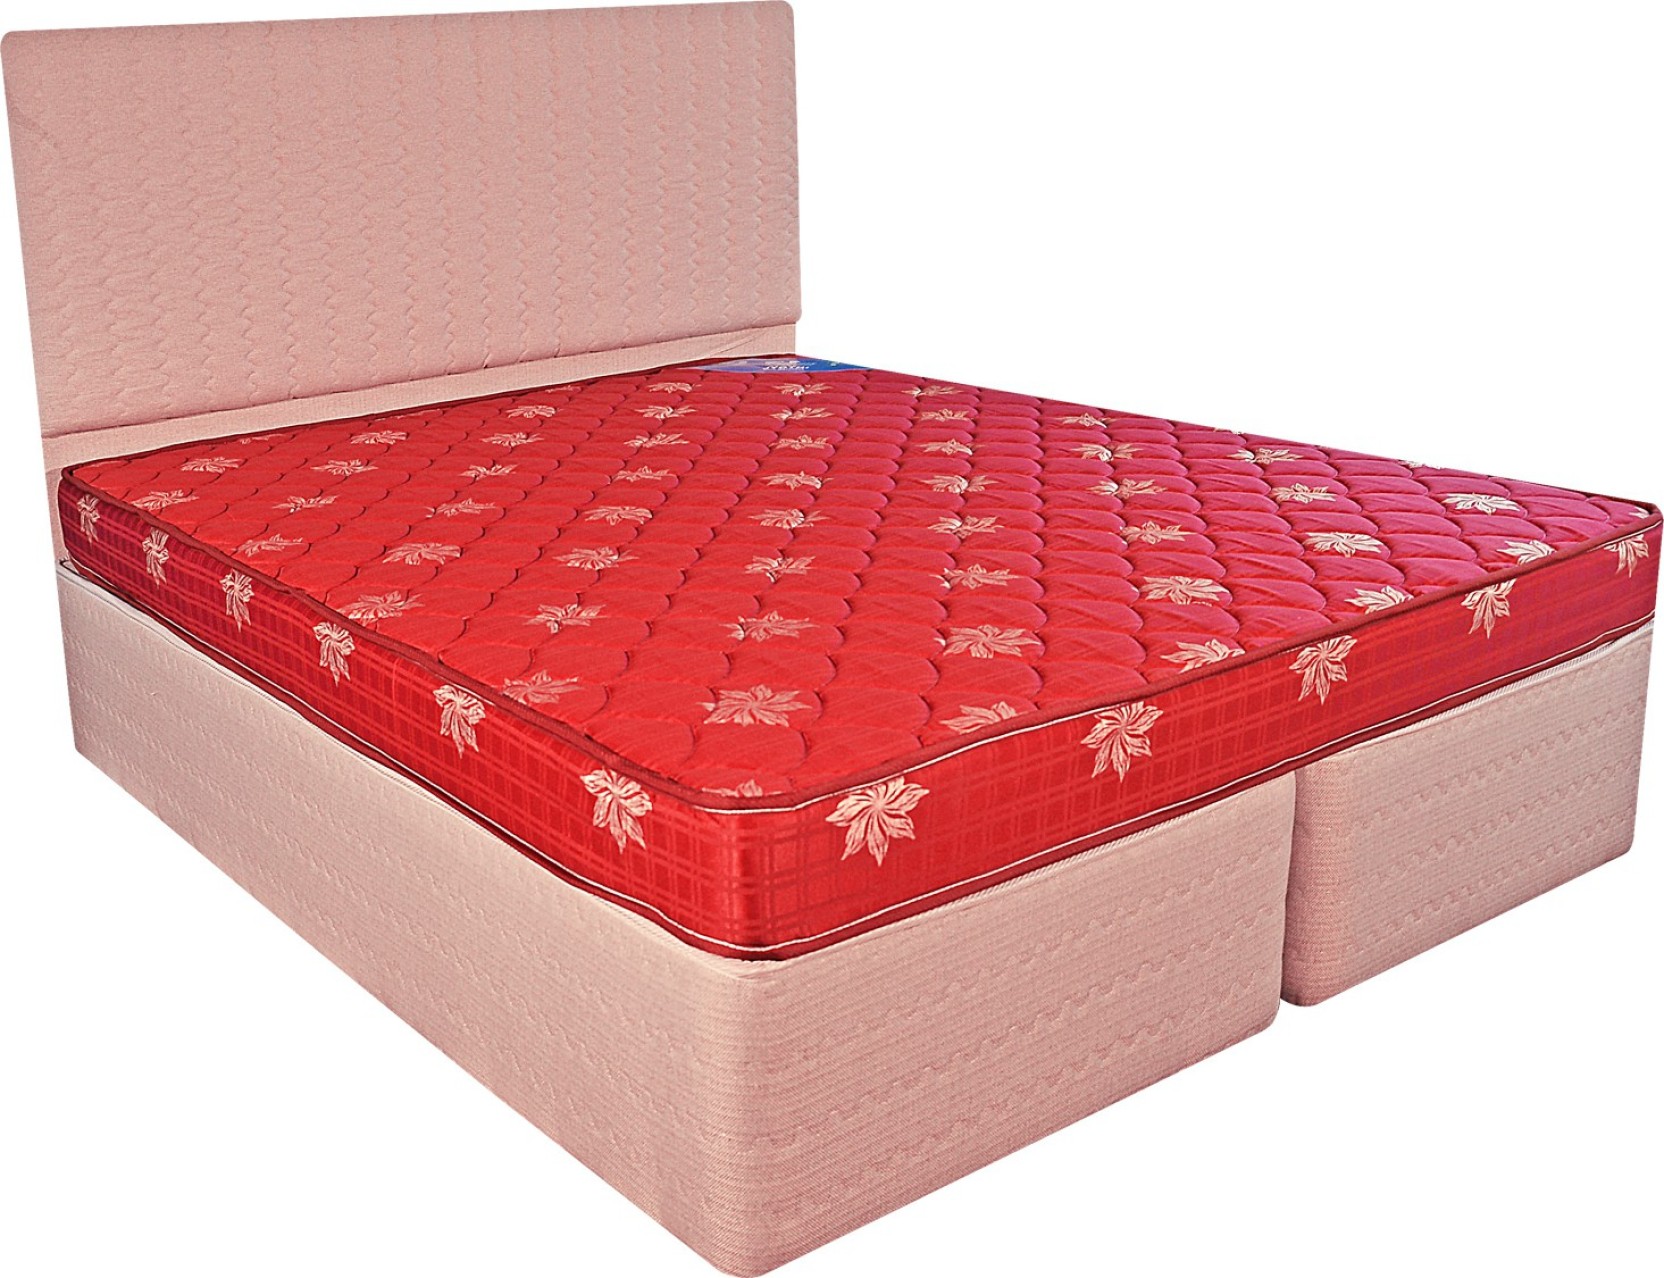 price of mattresses in india